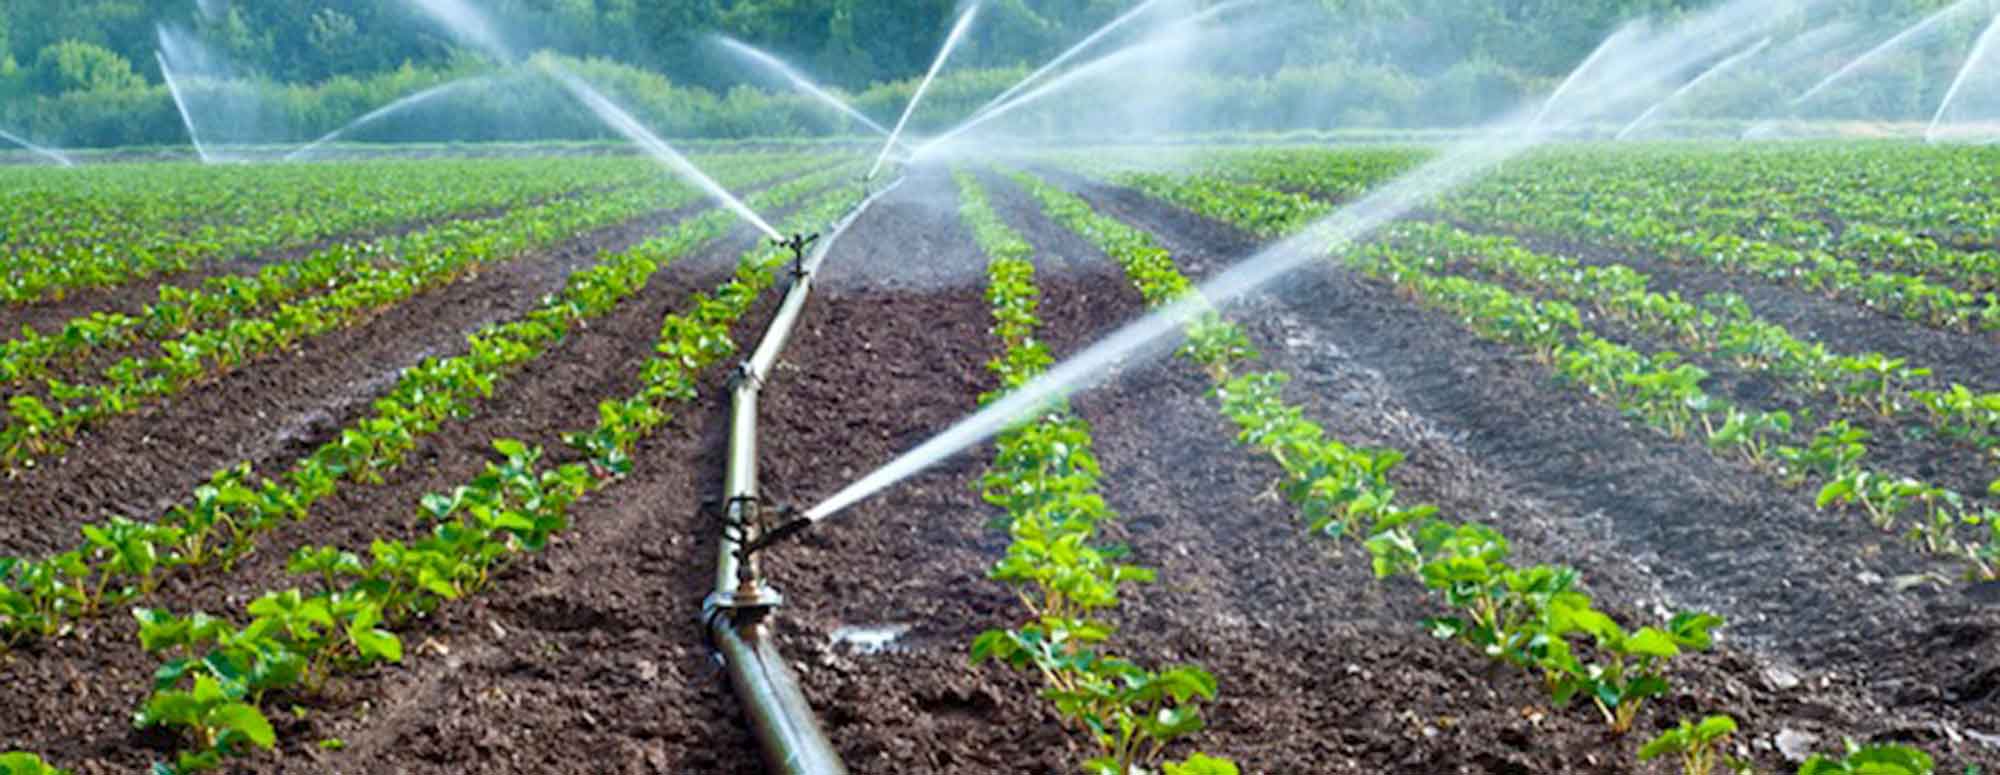 Irrigation systems Design